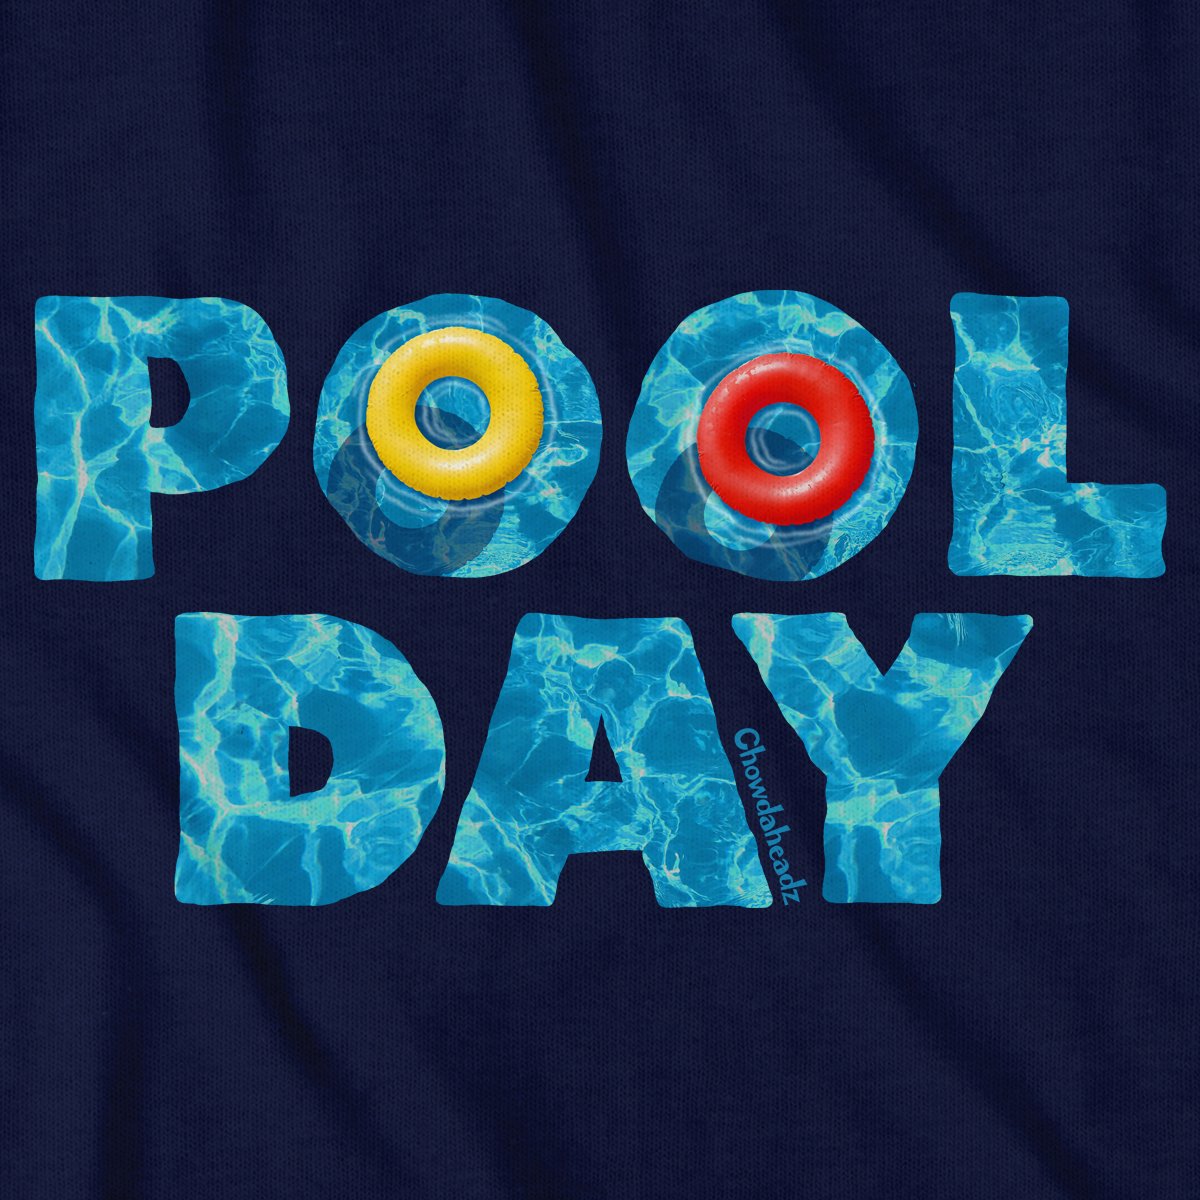 Pool Day T-Shirt - Chowdaheadz